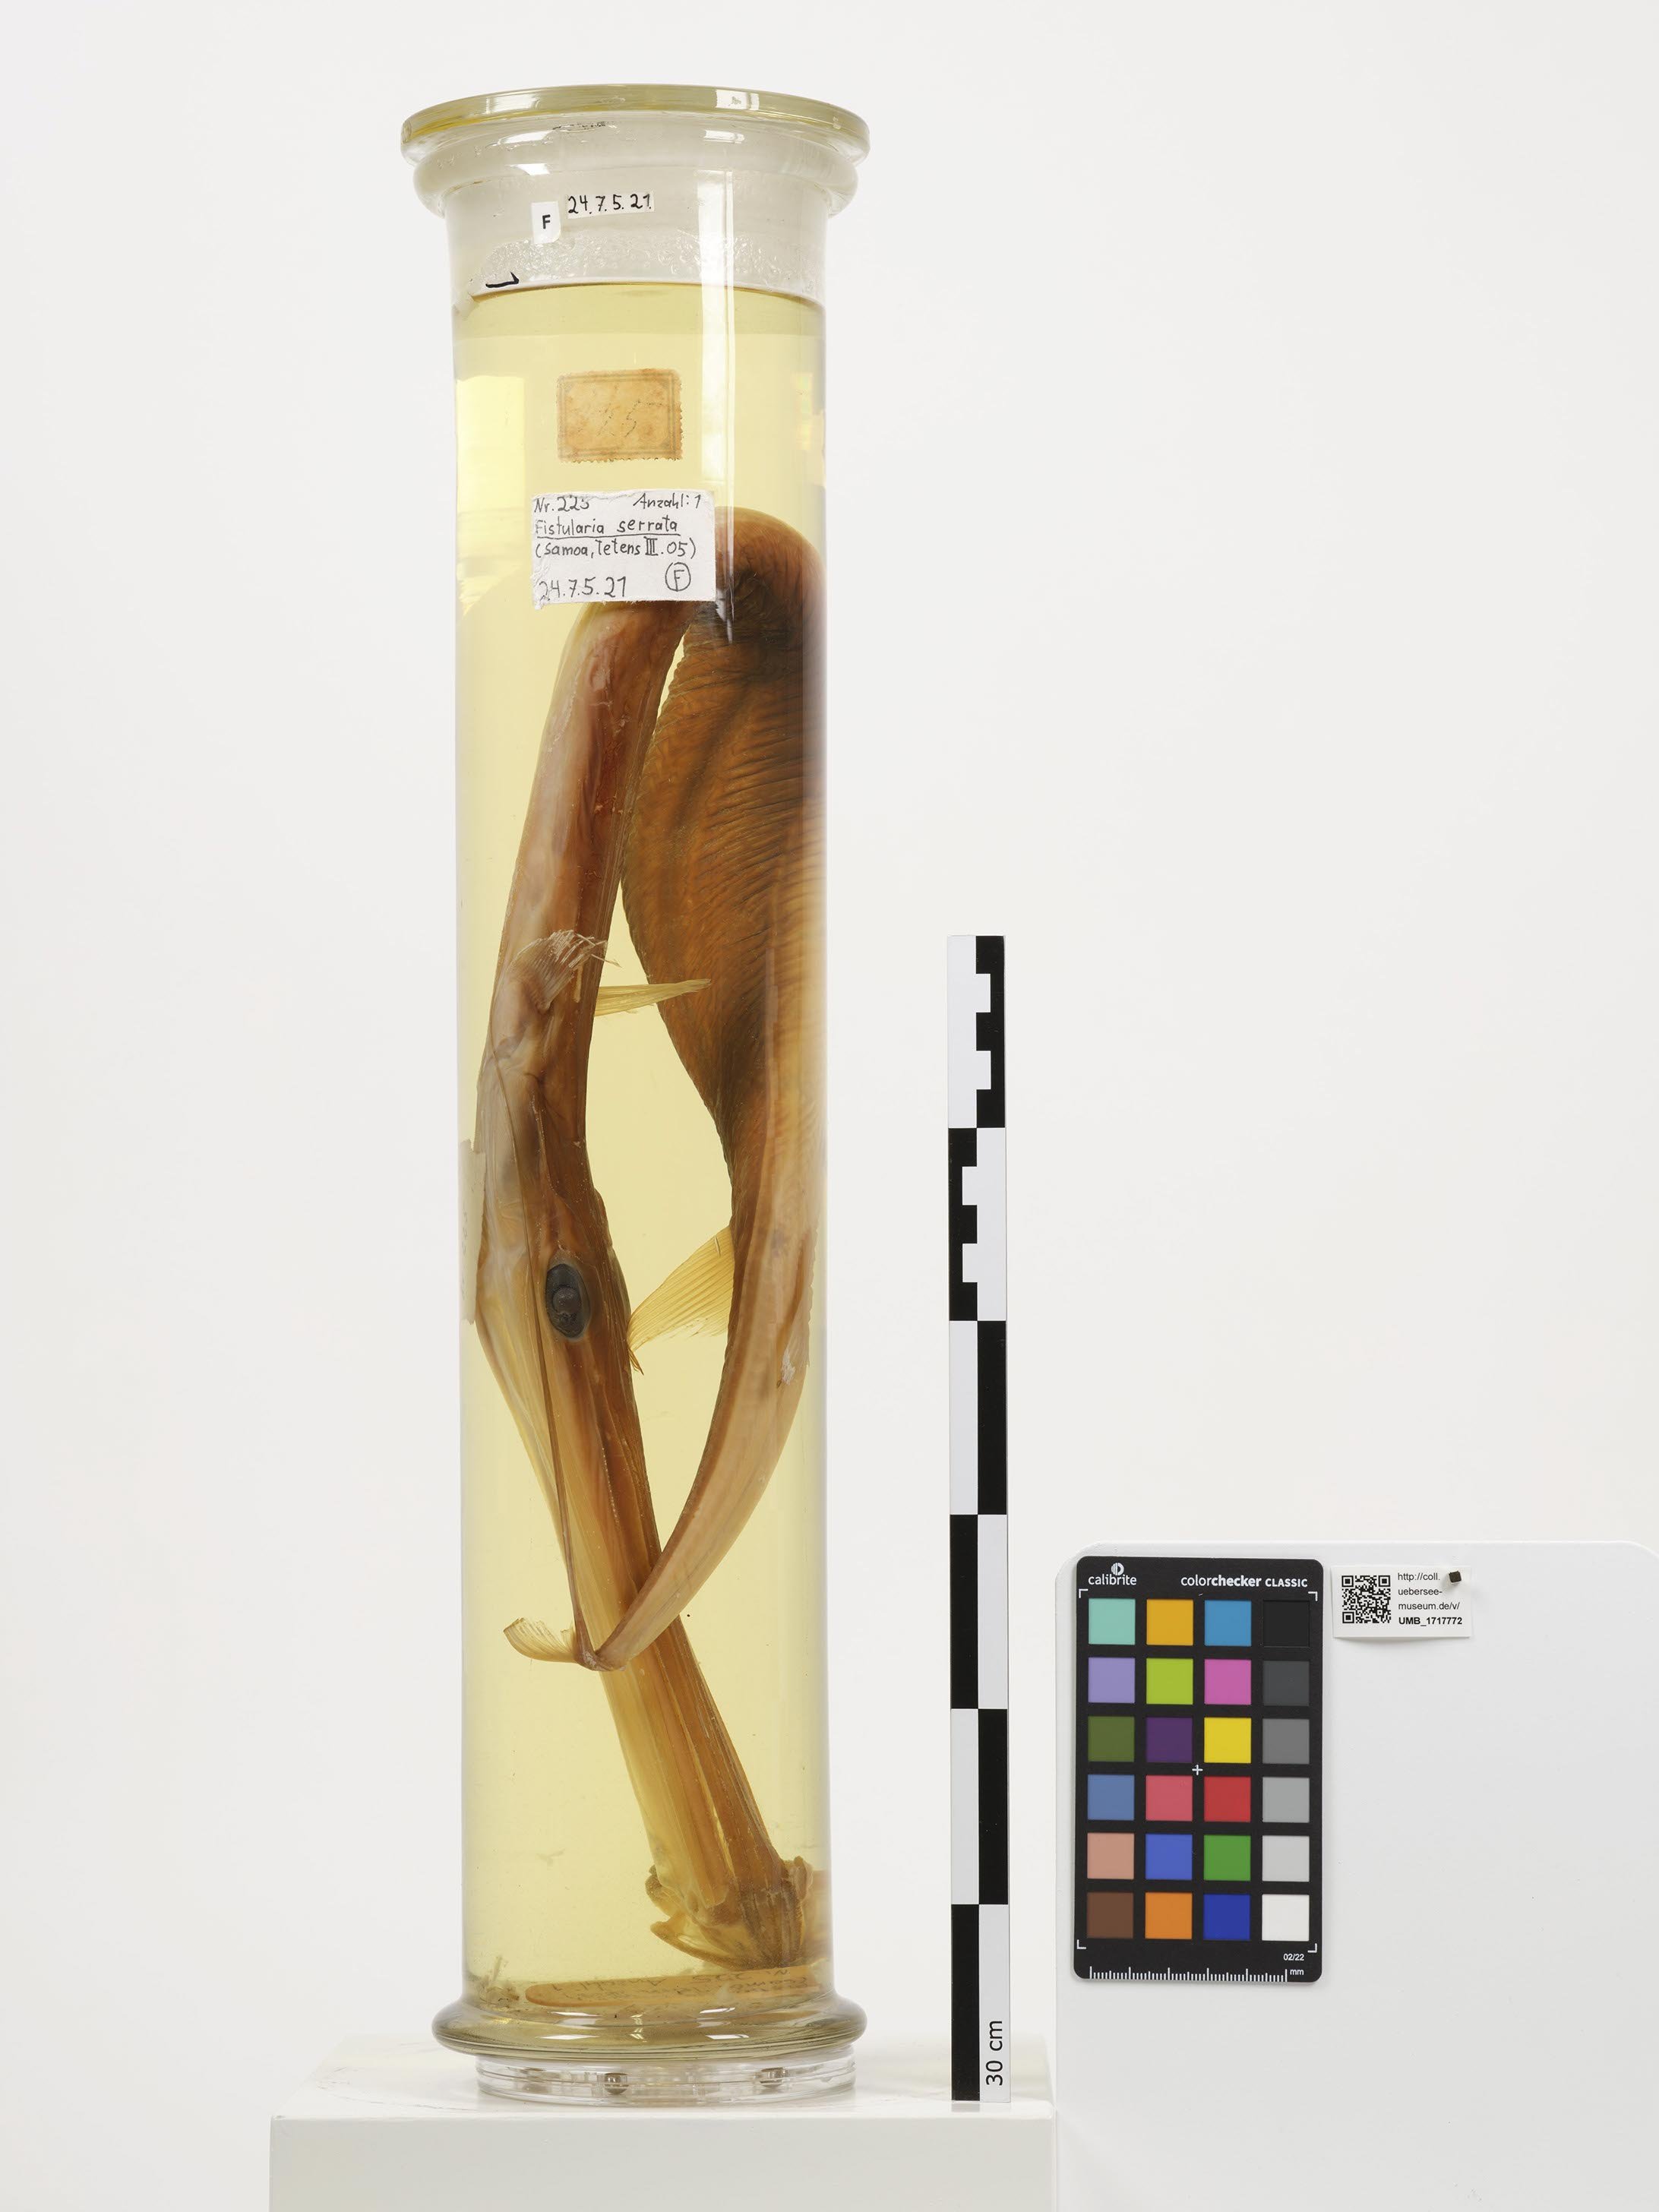 UMB_1717772 | Fistularia petimba | ganzer Organismus (Übersee-Museum Bremen CC BY-NC-SA)